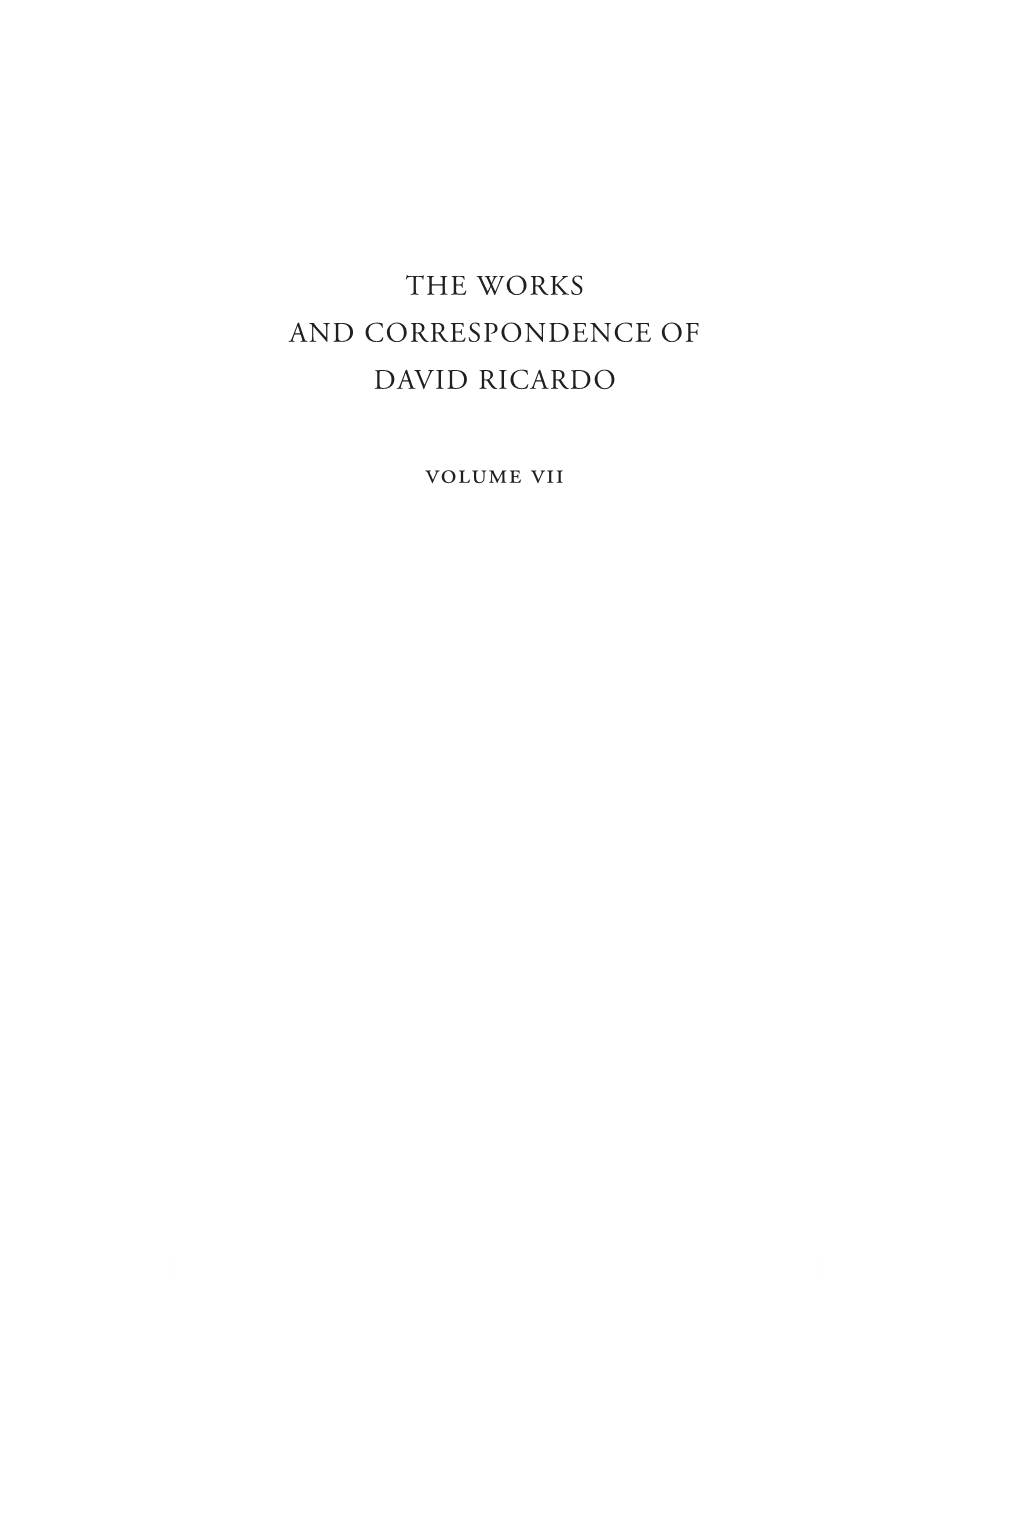 THE WORKS and CORRESPONDENCE of DAVID RICARDO Volume